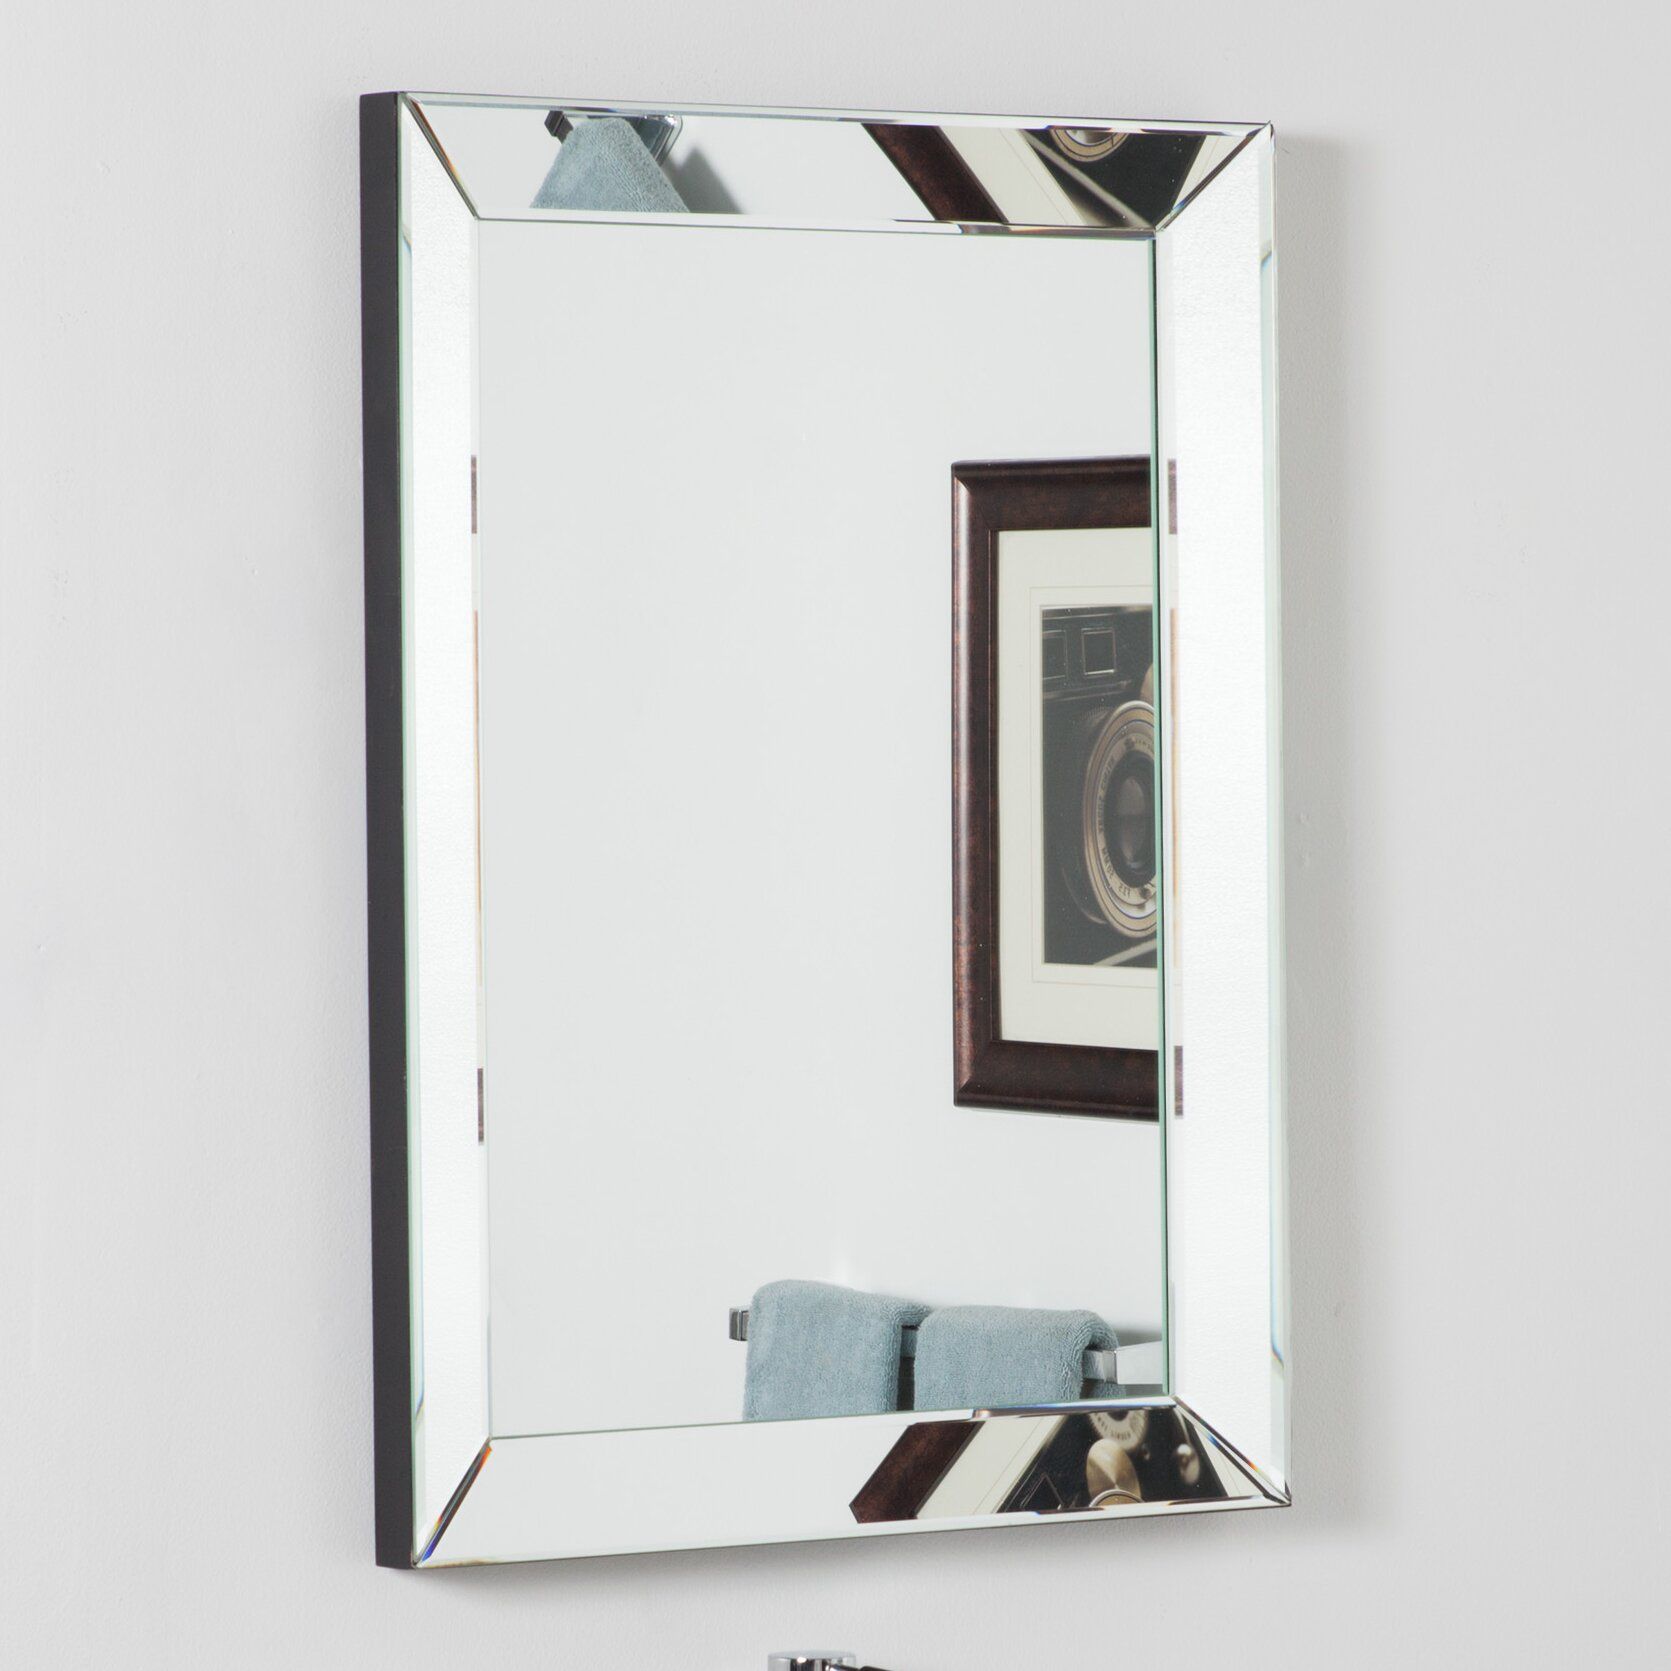 Decor Wonderland Mirror Framed Wall Mirror & Reviews | Wayfair Throughout Mirror Framed Bathroom Wall Mirrors (View 12 of 15)